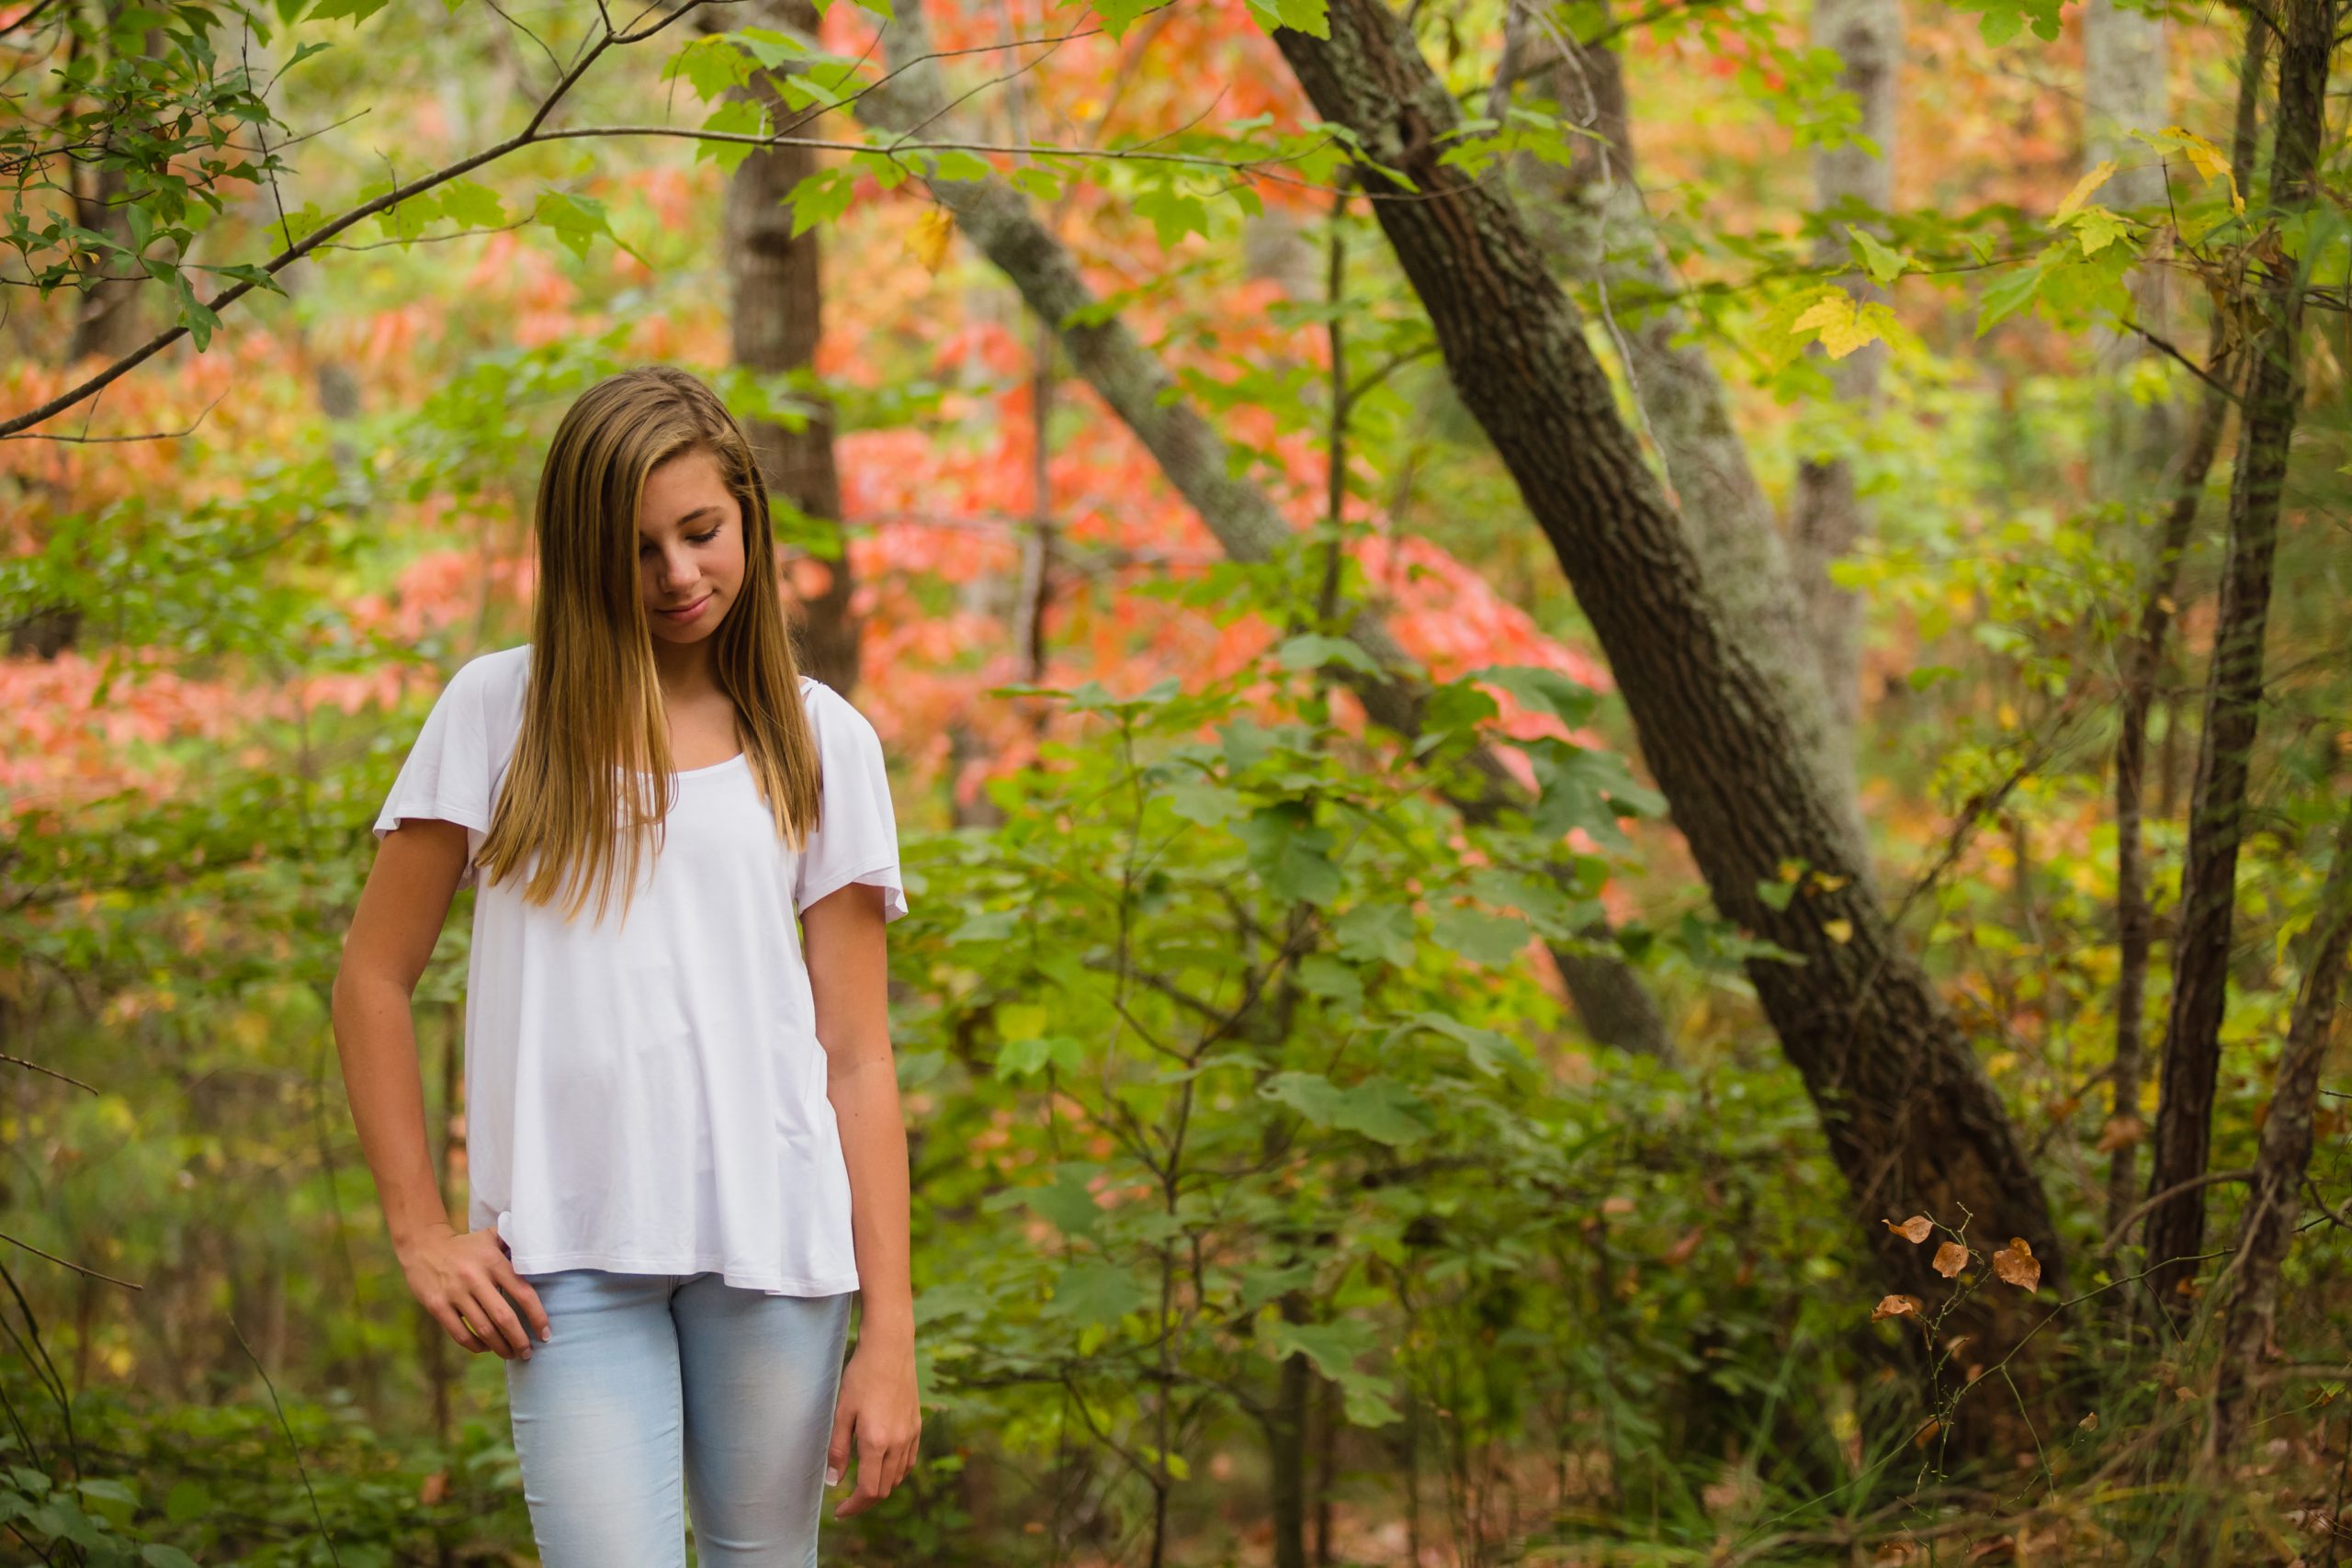 Teenage girl walking in woods with fall foliage